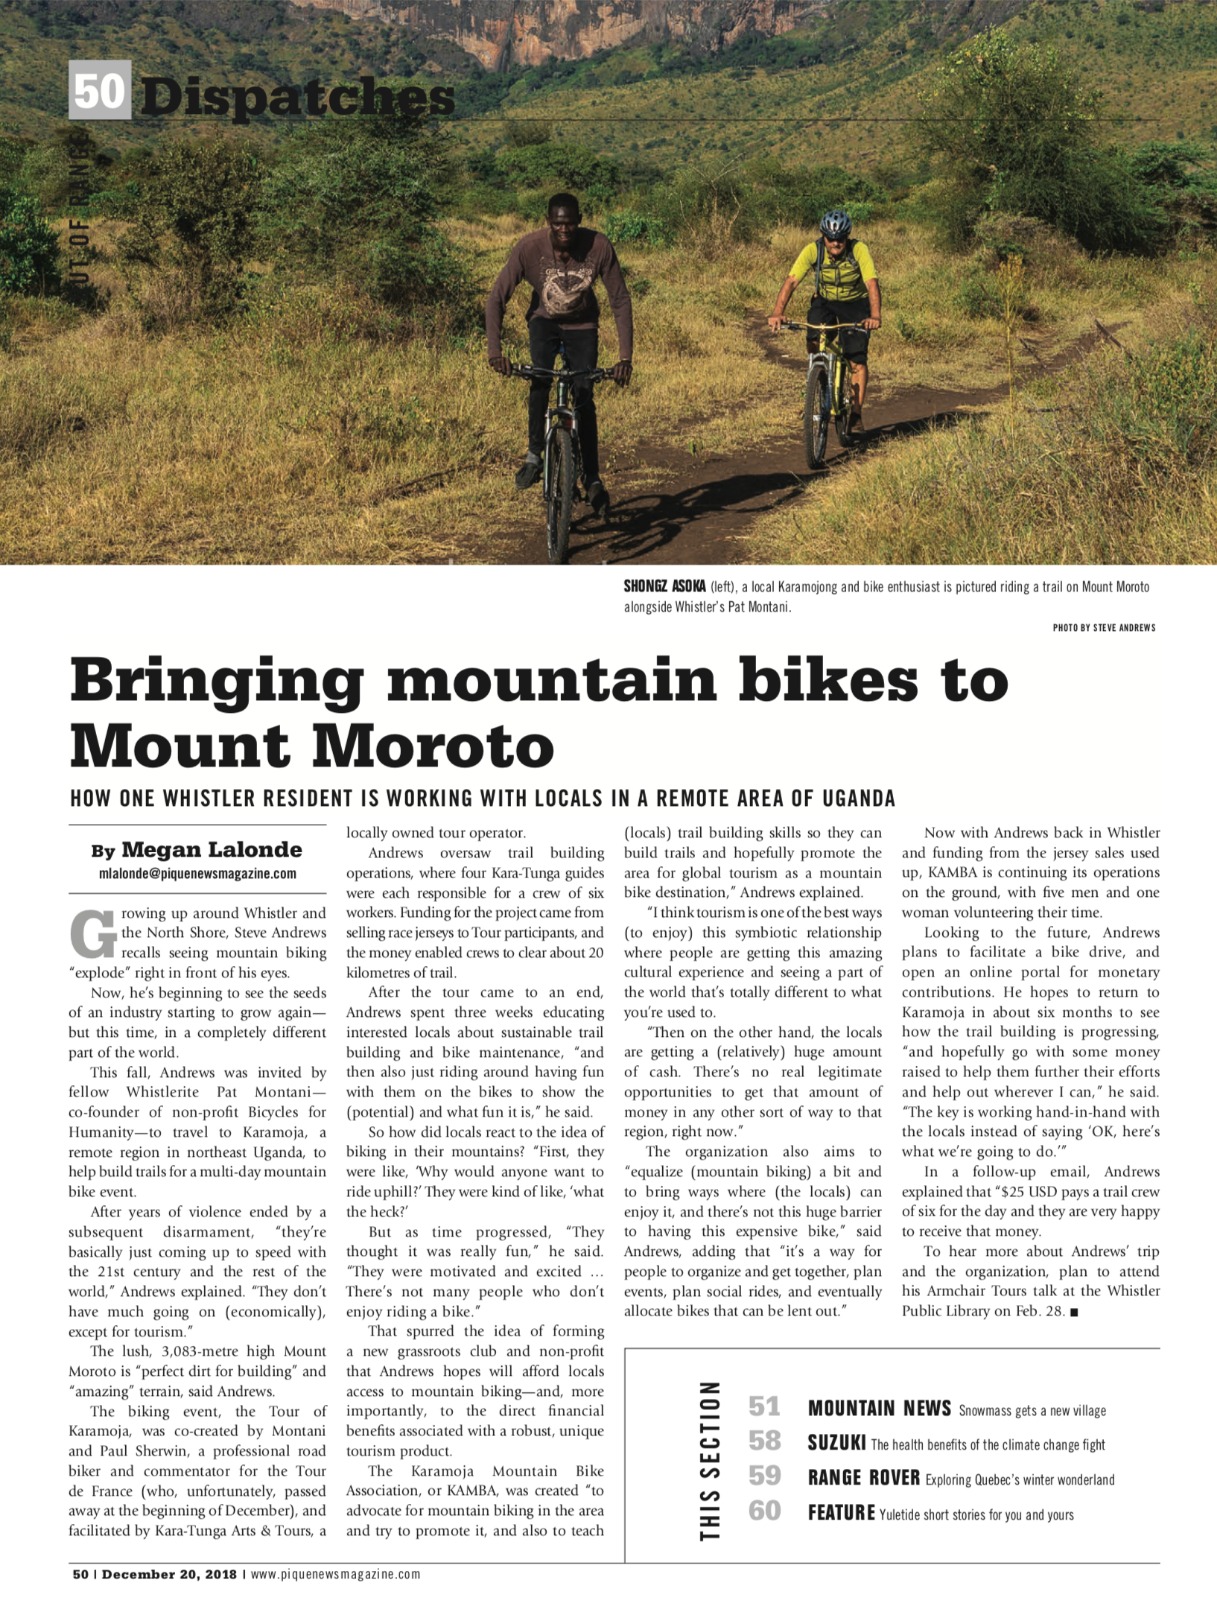 Kara-Tunga Tours Piquenews Magazine Mountain Bike Karamoja Mount Moroto